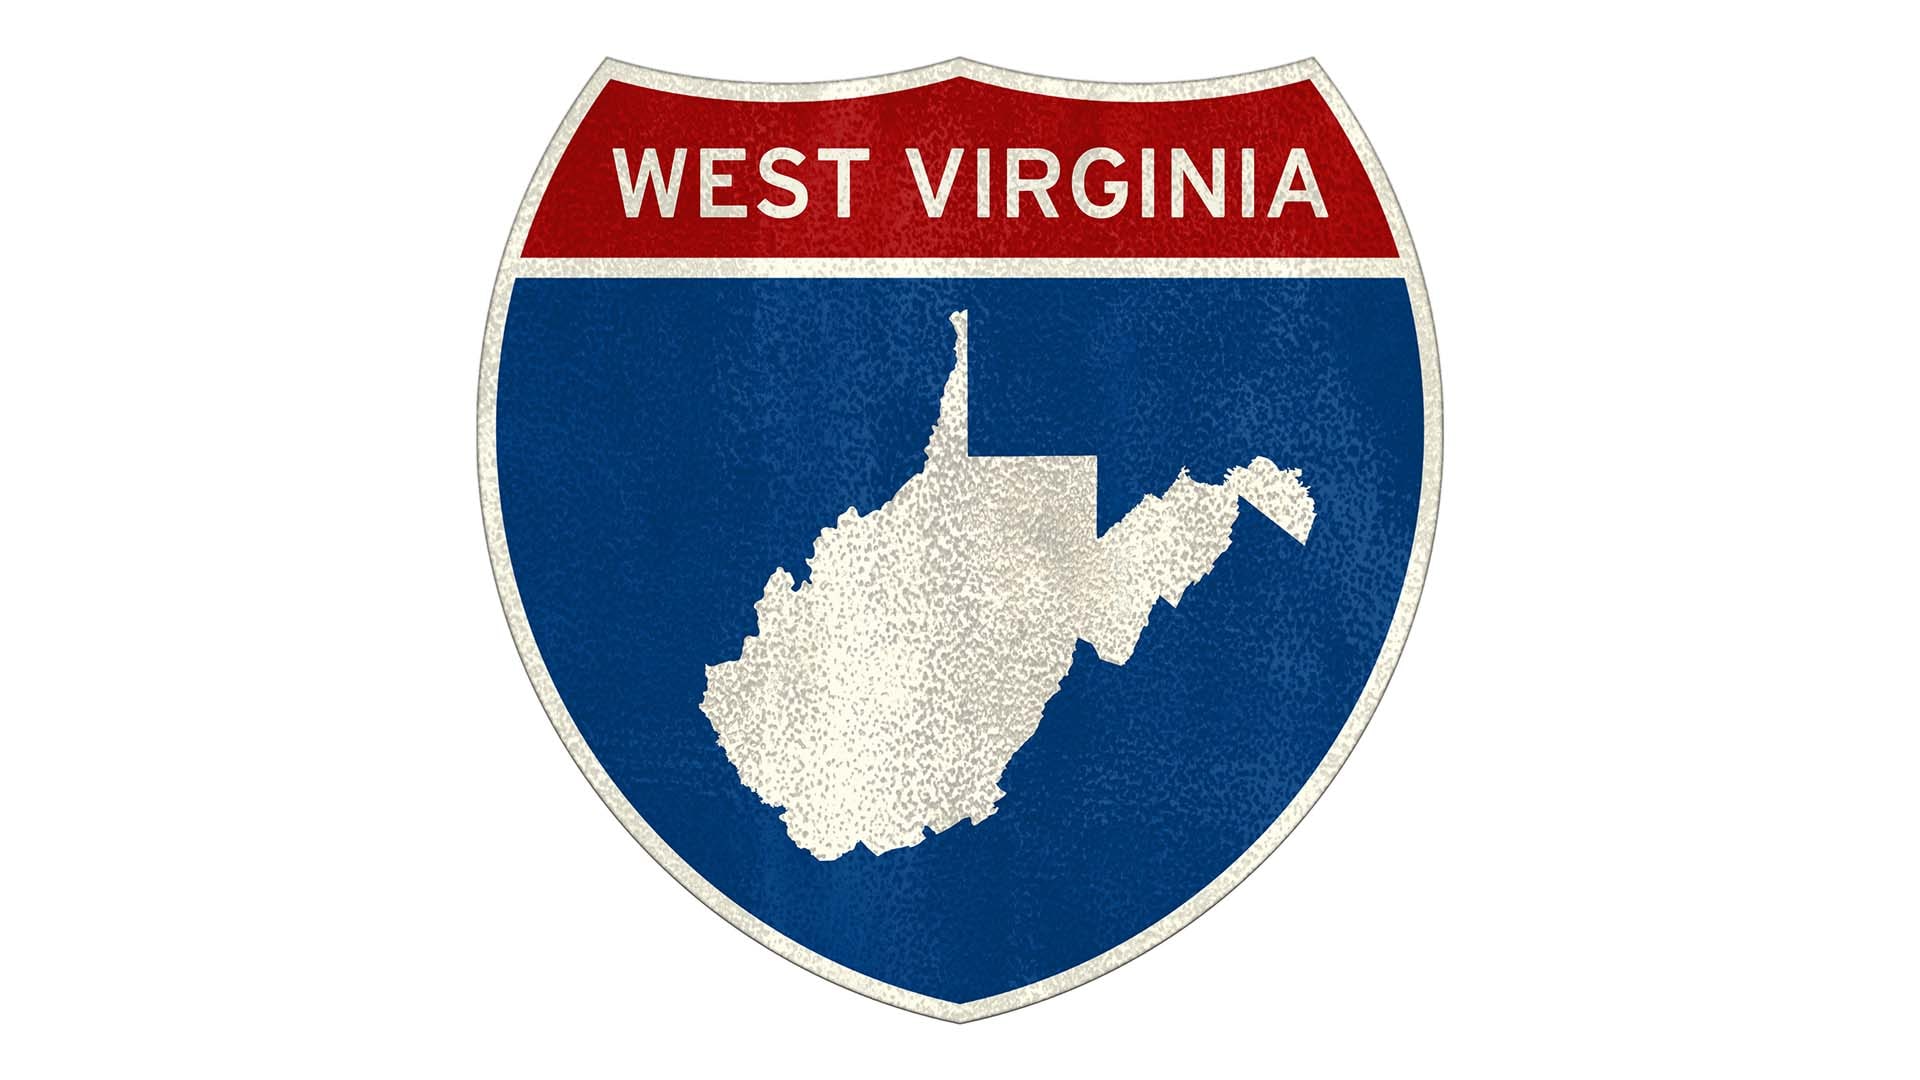 West Virginia state roadside sign